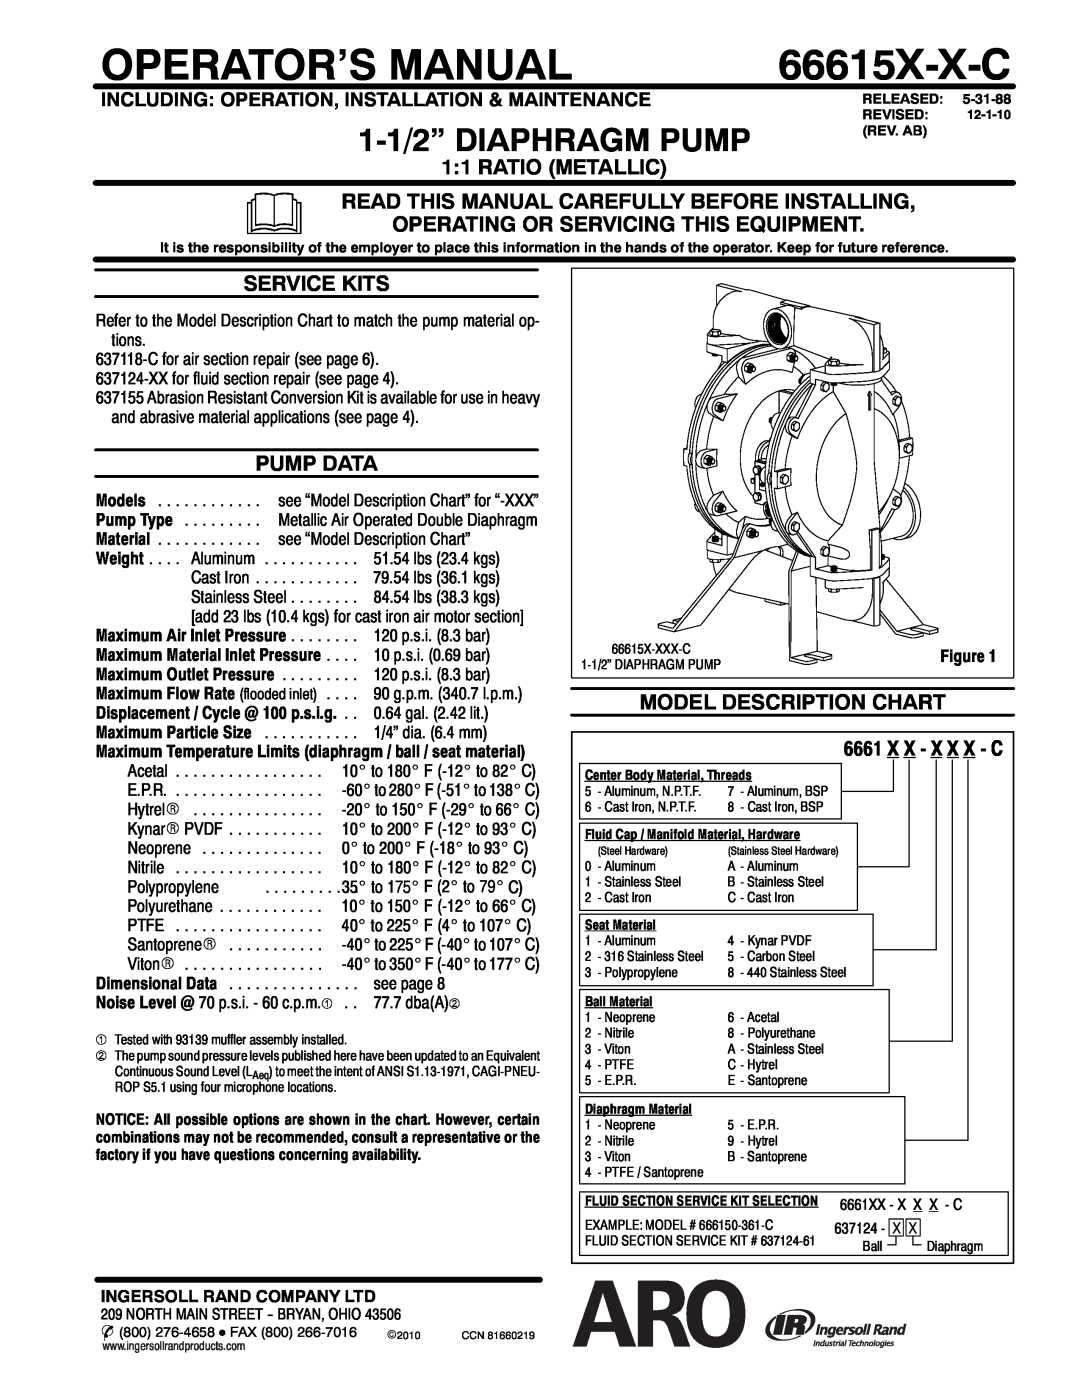 Ingersoll-Rand 66615X-X-C manual Ratio Metallic, Read This Manual Carefully Before Installing, Service Kits, Pump Data 